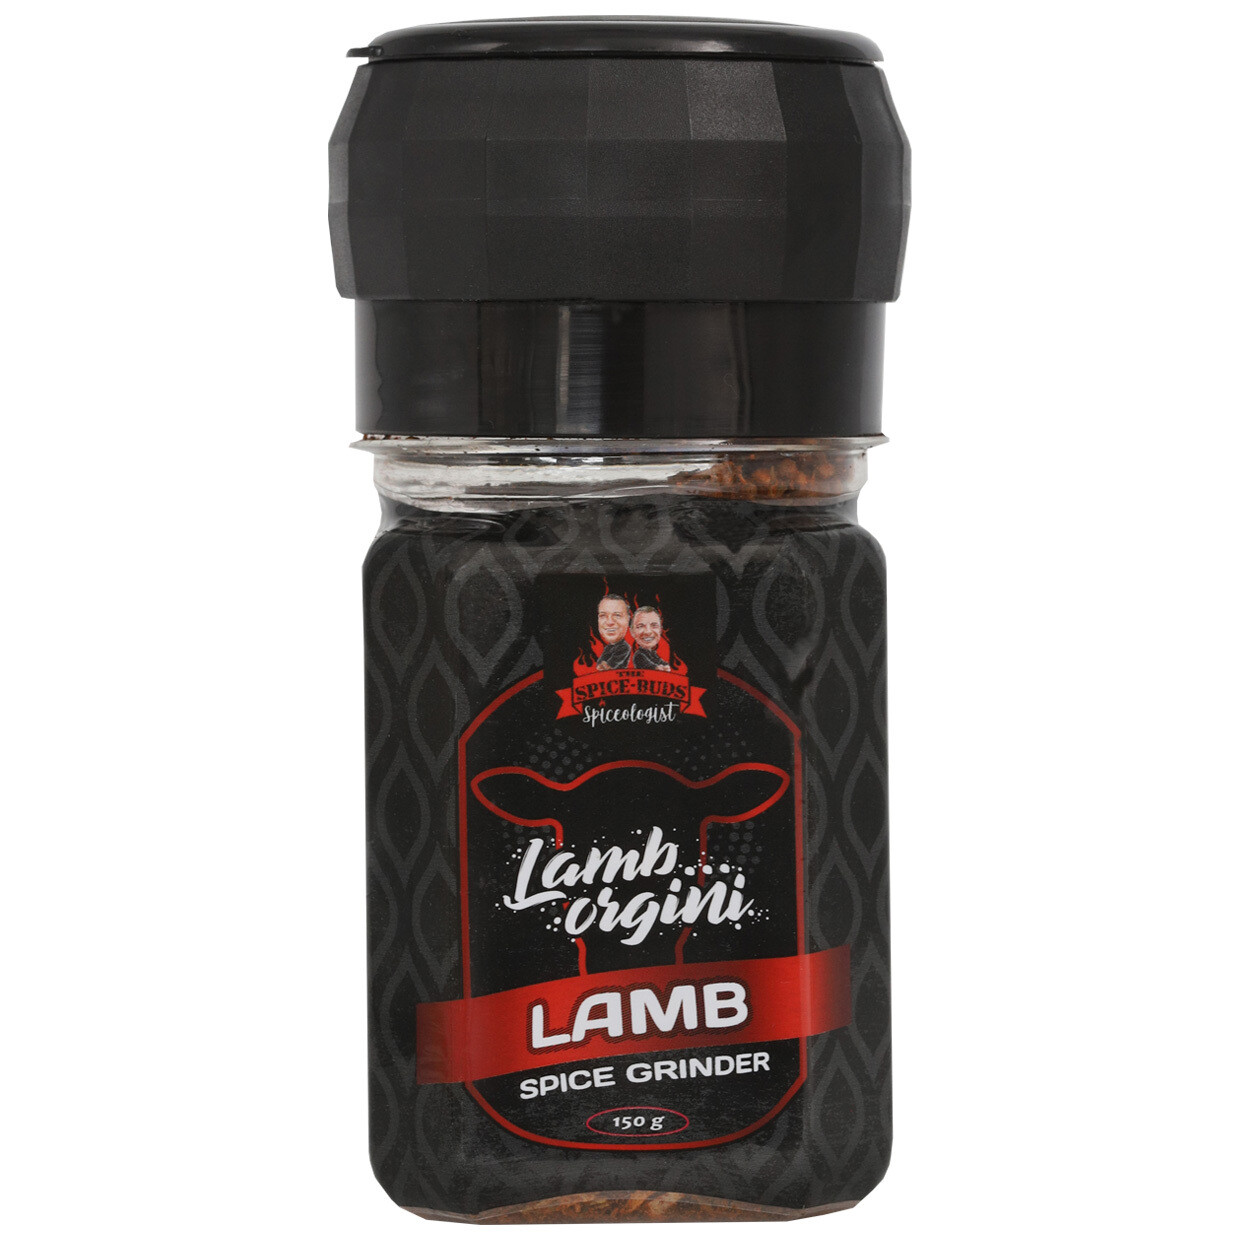 Lamb...orgini Lamb Grinder - 150g